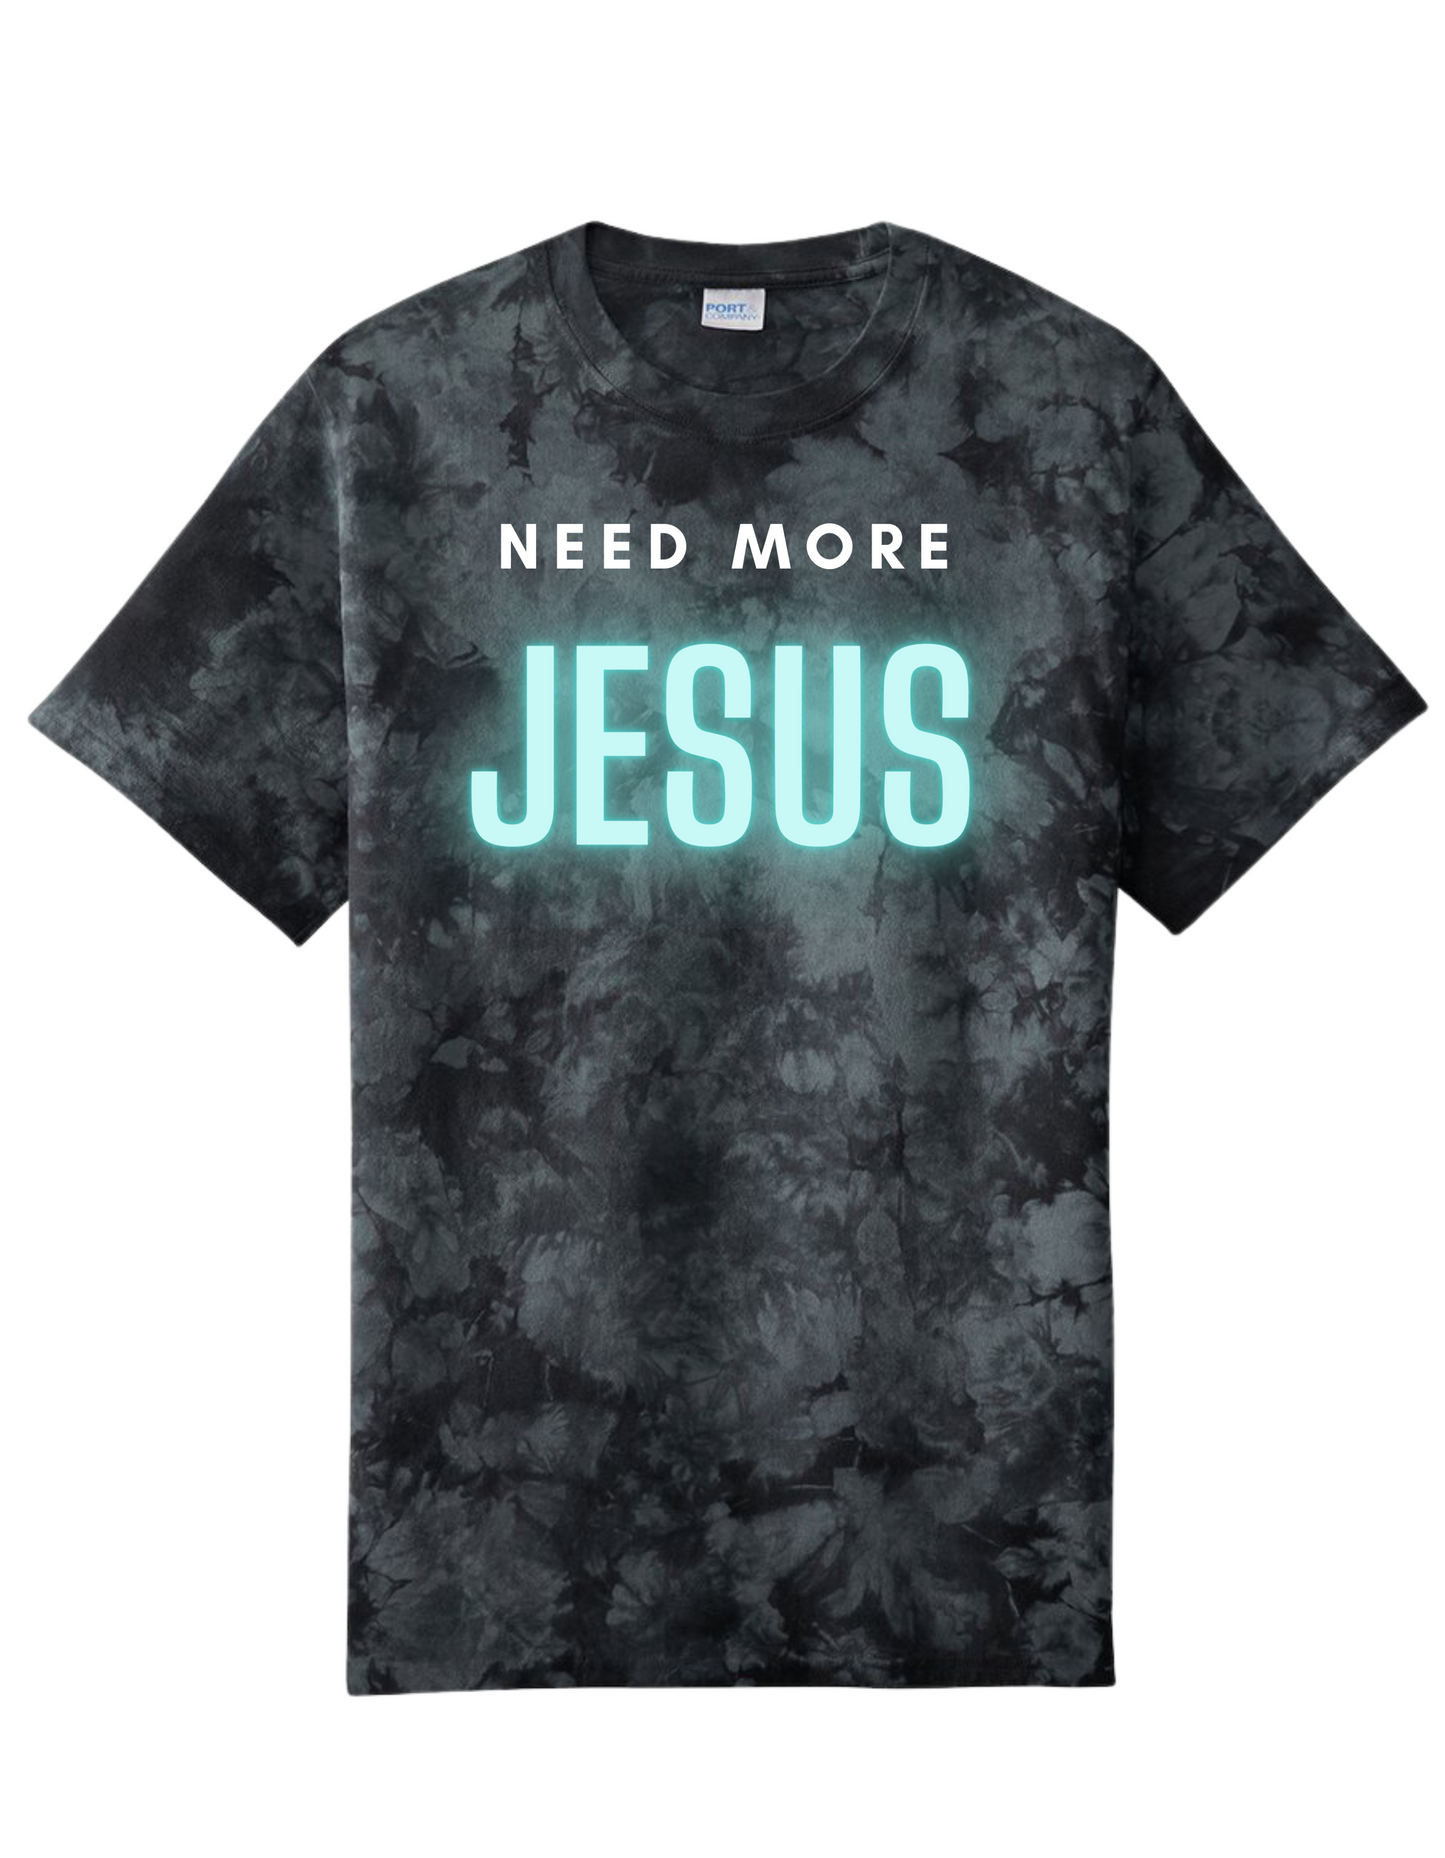 Need more Jesus